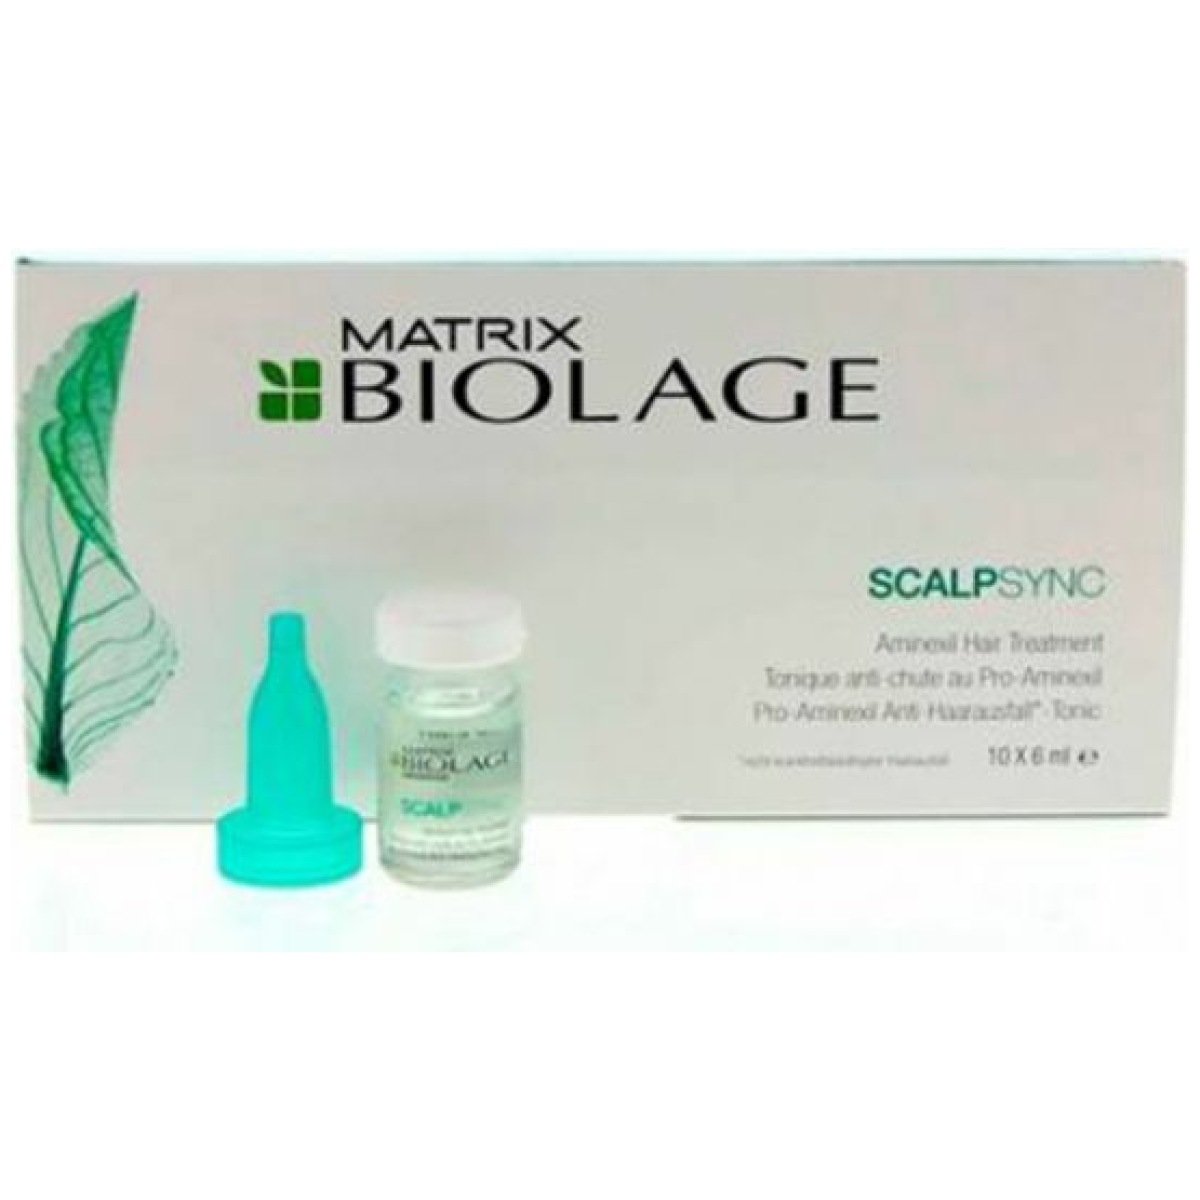 Matrix Biolage ScalpSync Aminexil Hair Treatment (10 x 6 ml)